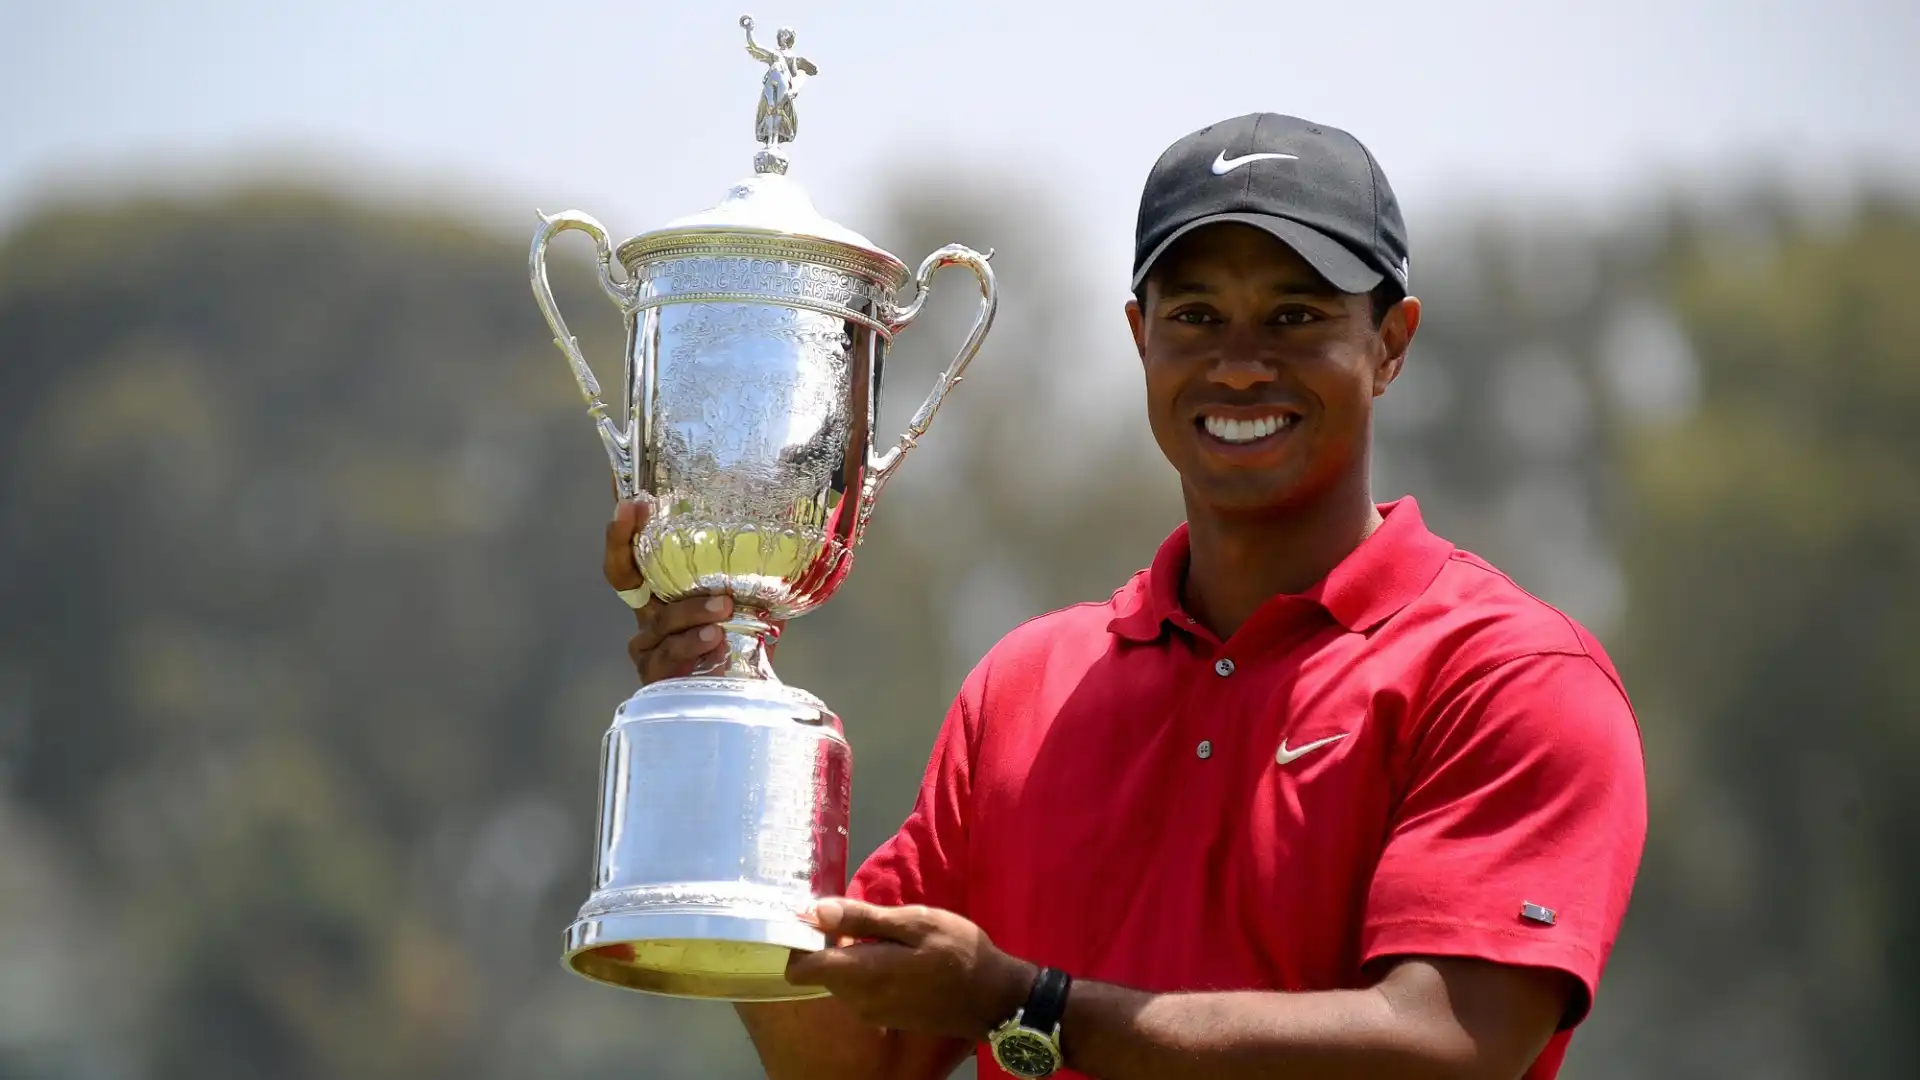 2008: Tiger Woods (Golf), guadagni totali stimati 115 milioni di dollari